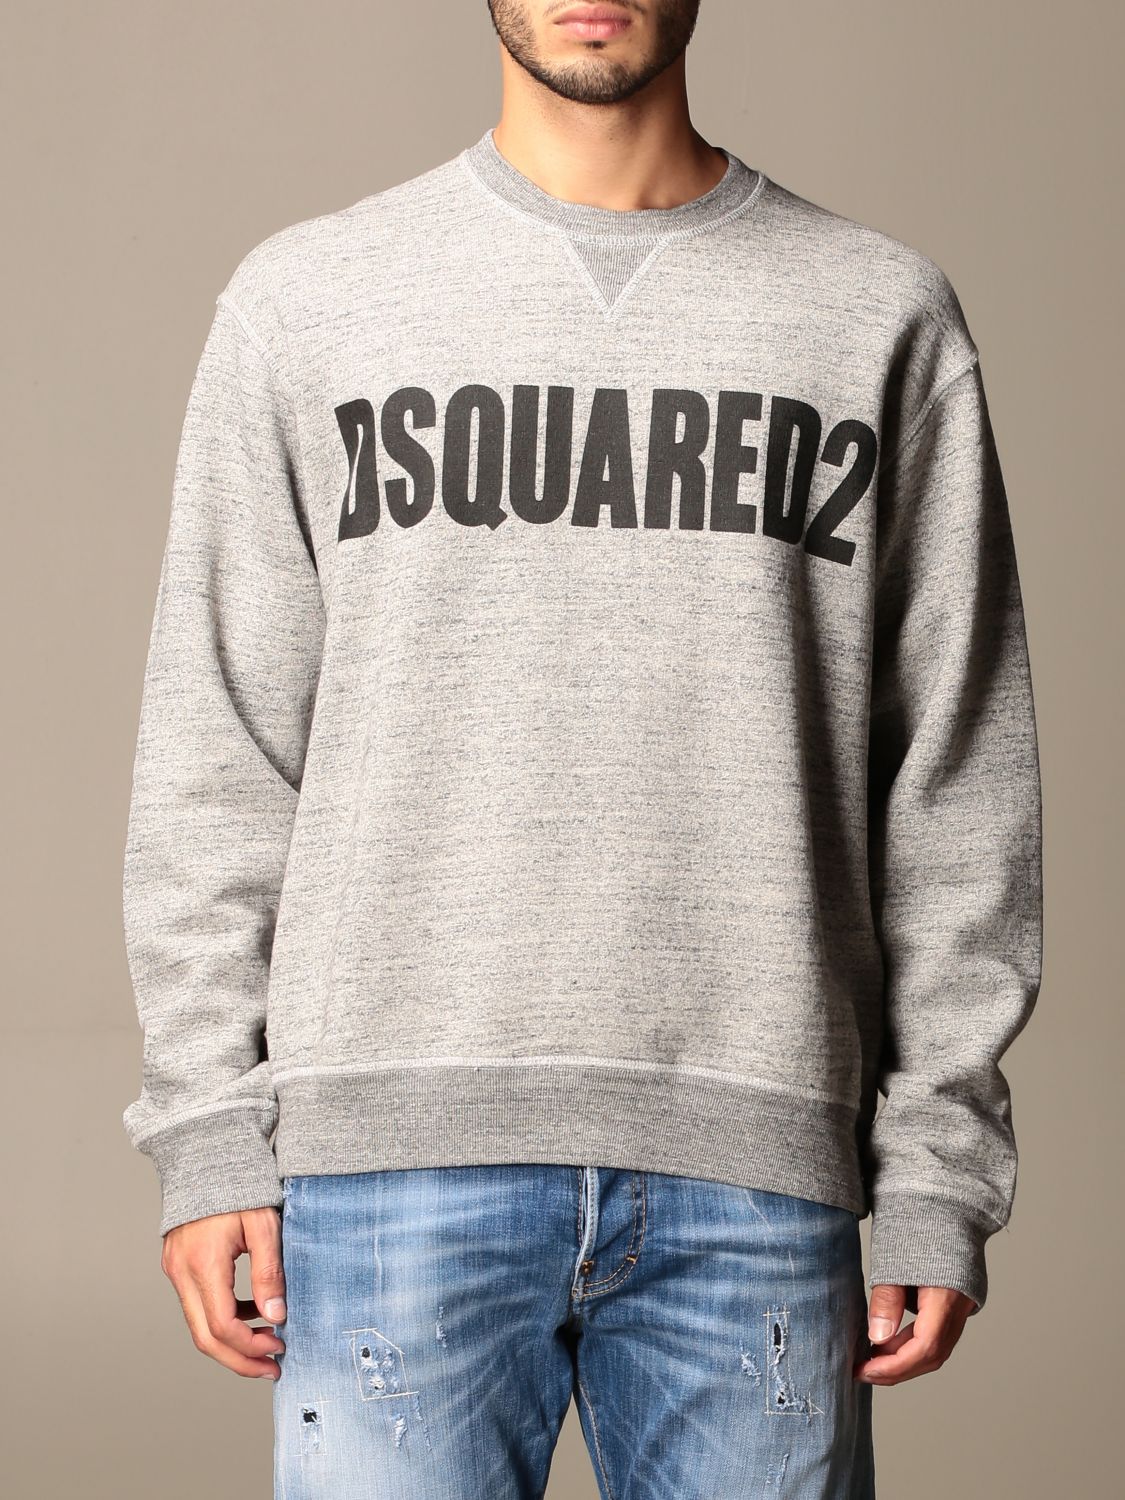 dsquared2 grey sweatshirt